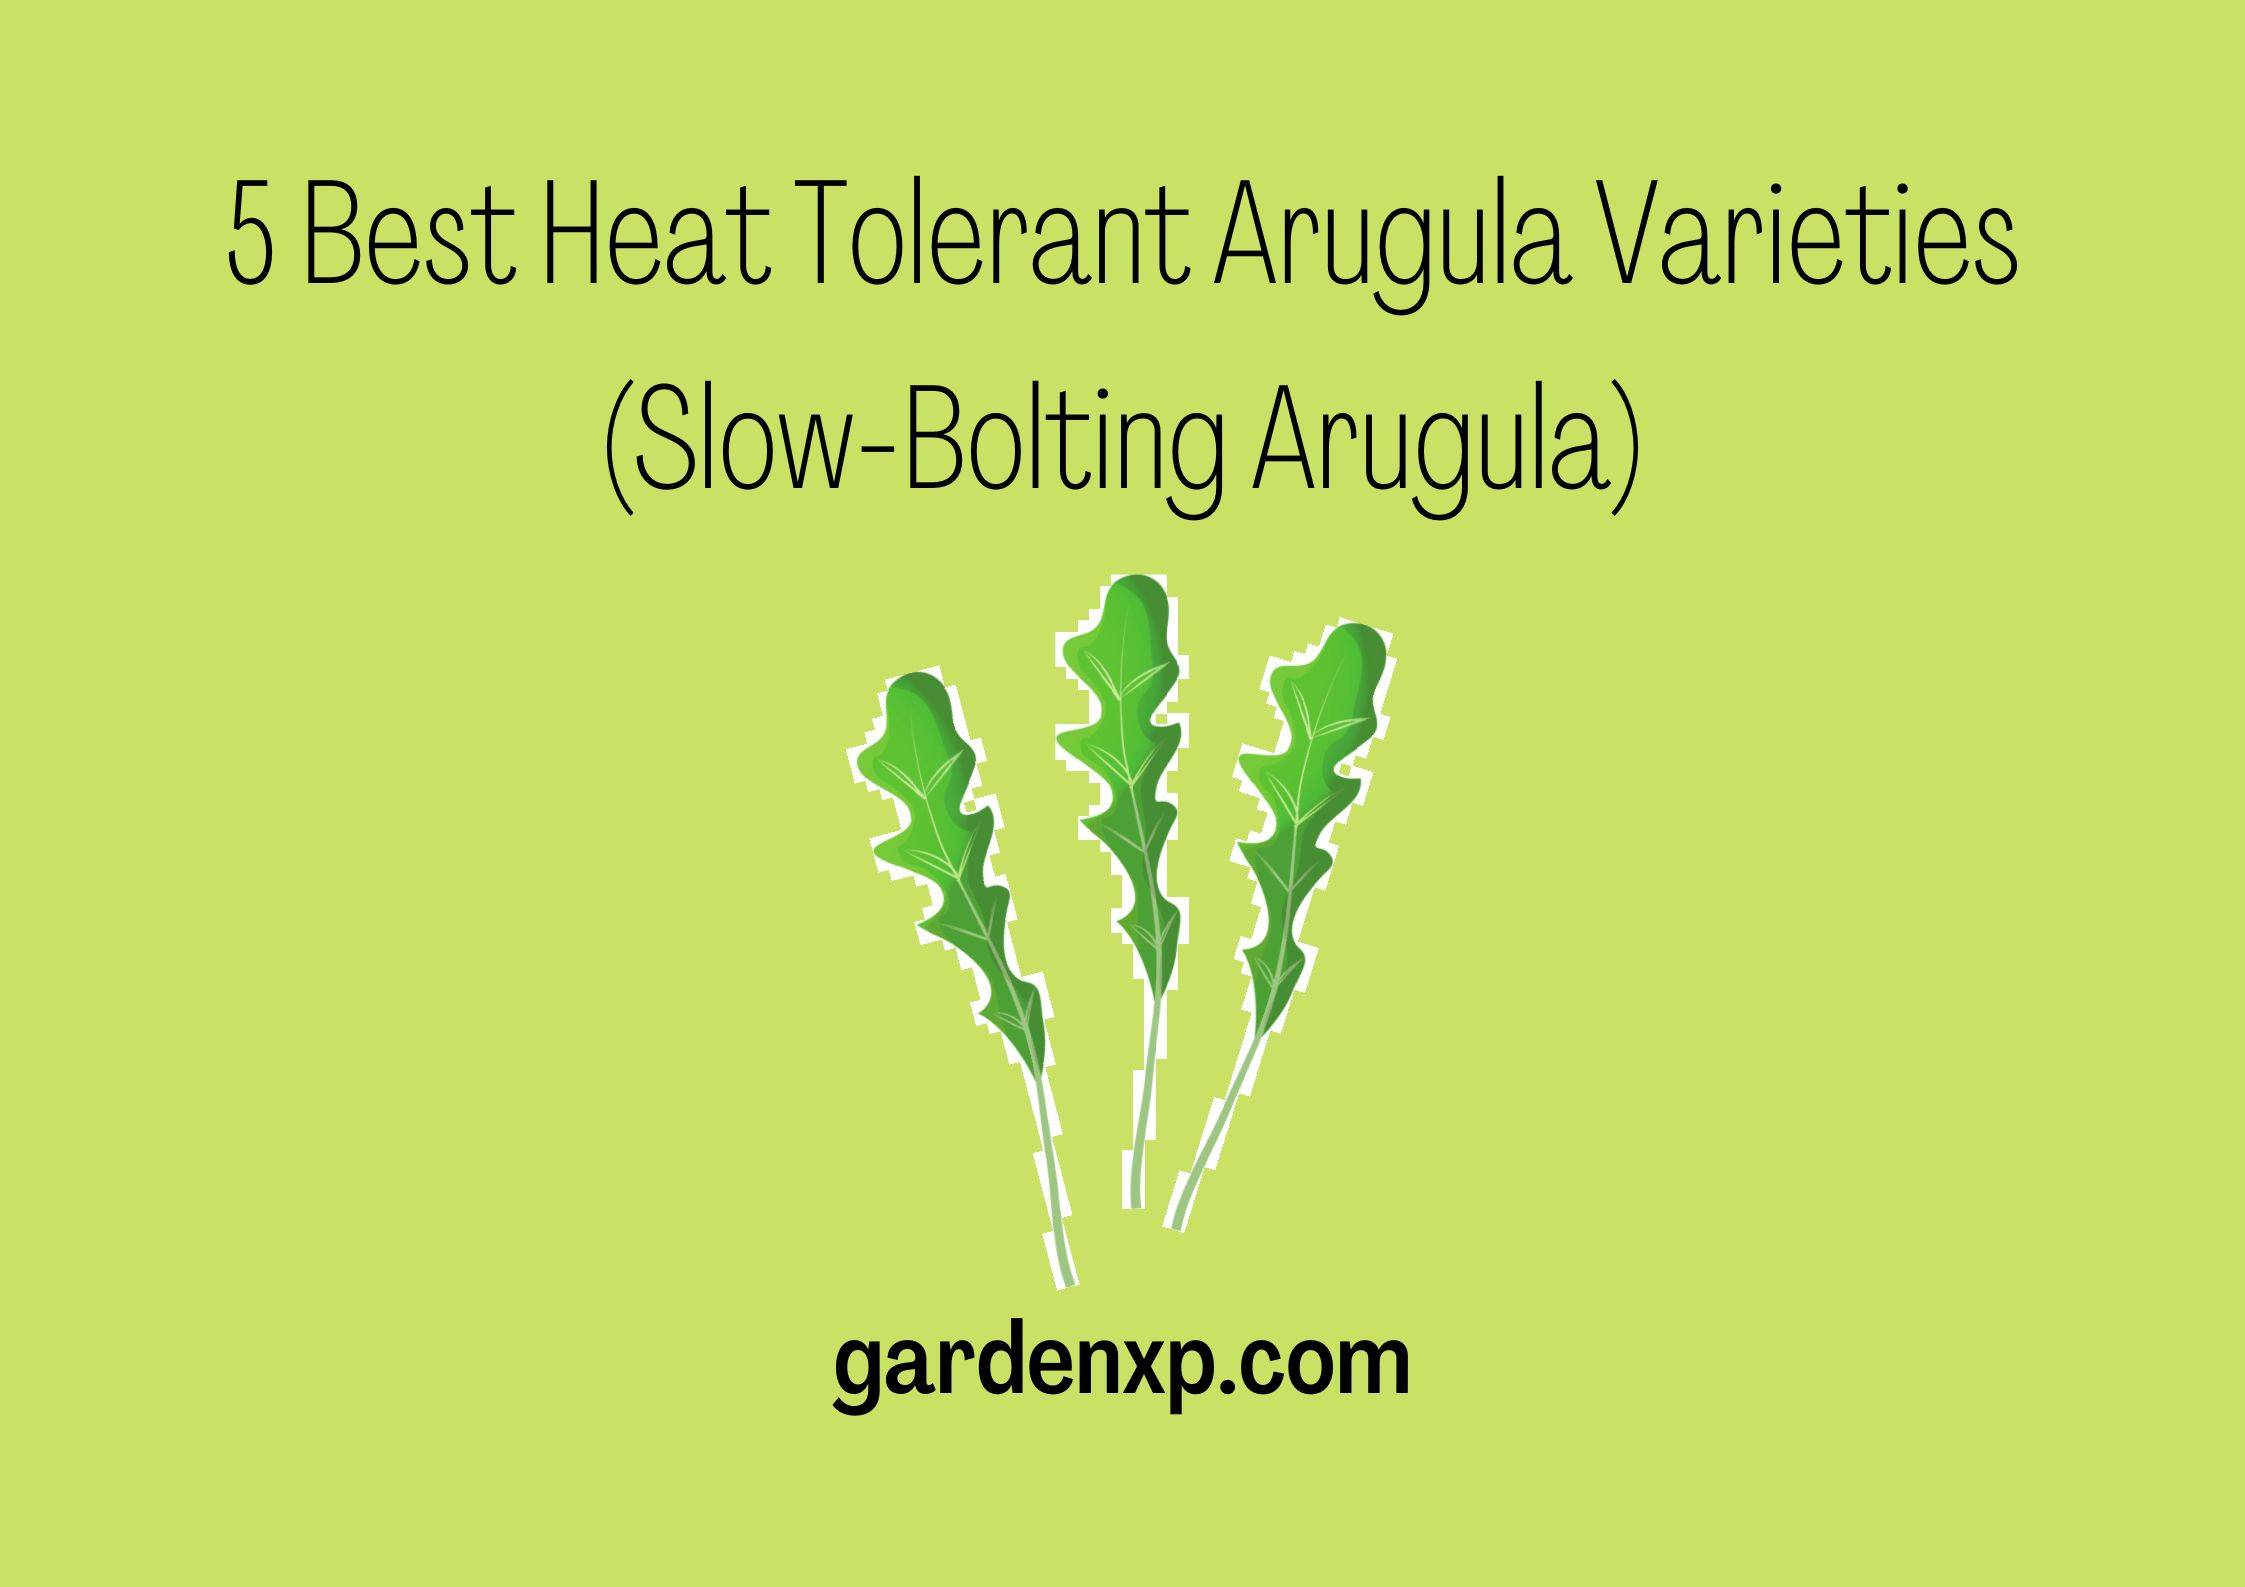 <strong>5 Best Heat Tolerant Arugula Varieties (Slow-Bolting Arugula)</strong>